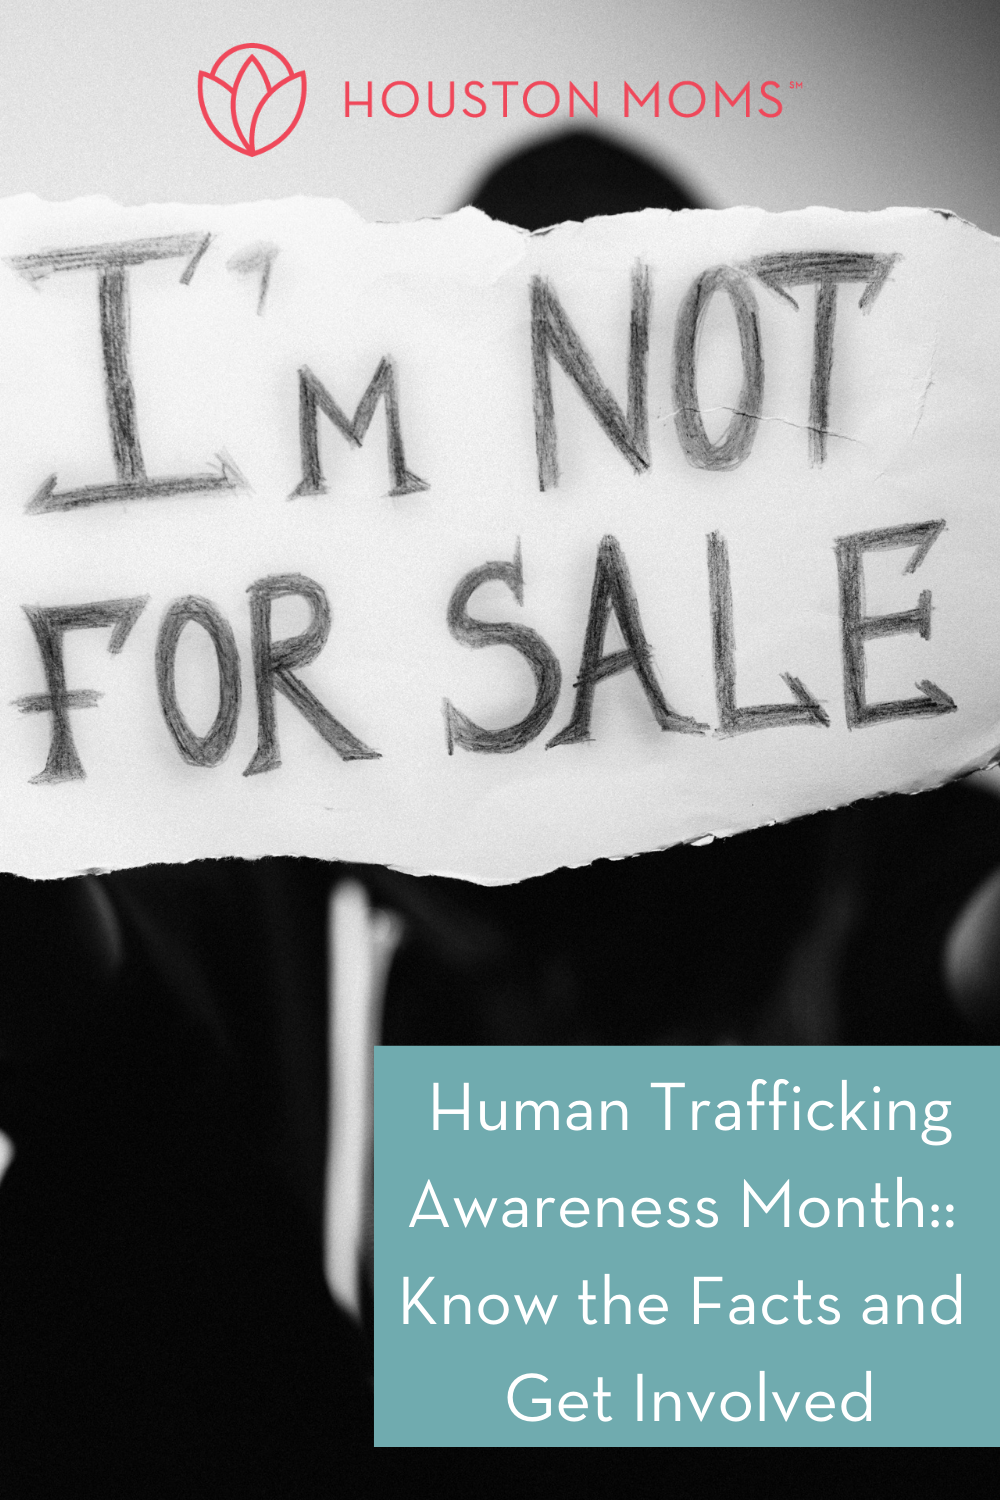 Houston Moms "Human Trafficking Awareness Month:: Know the Facts and Get Involved" #Houstonmoms #houstonmomsblog #momsaroundhouston